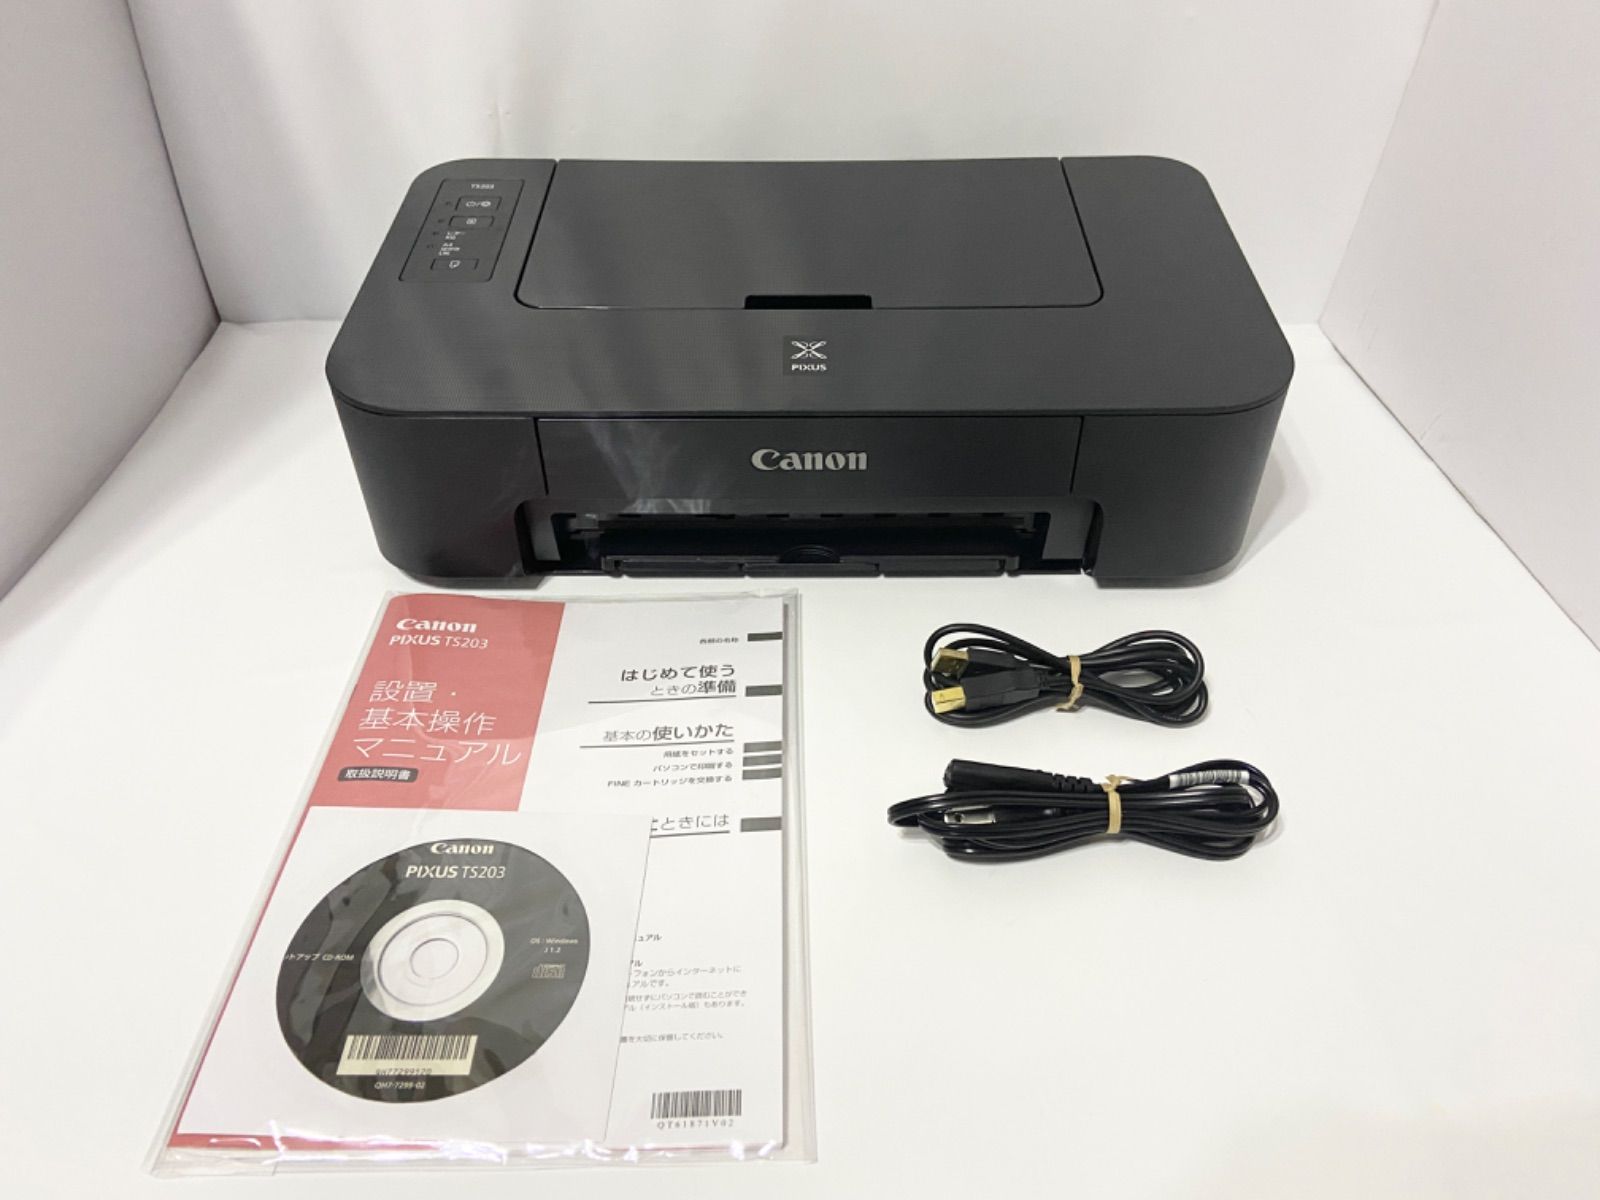 Canon プリンター PIXUS TS203 - reプリンターショップ - メルカリ